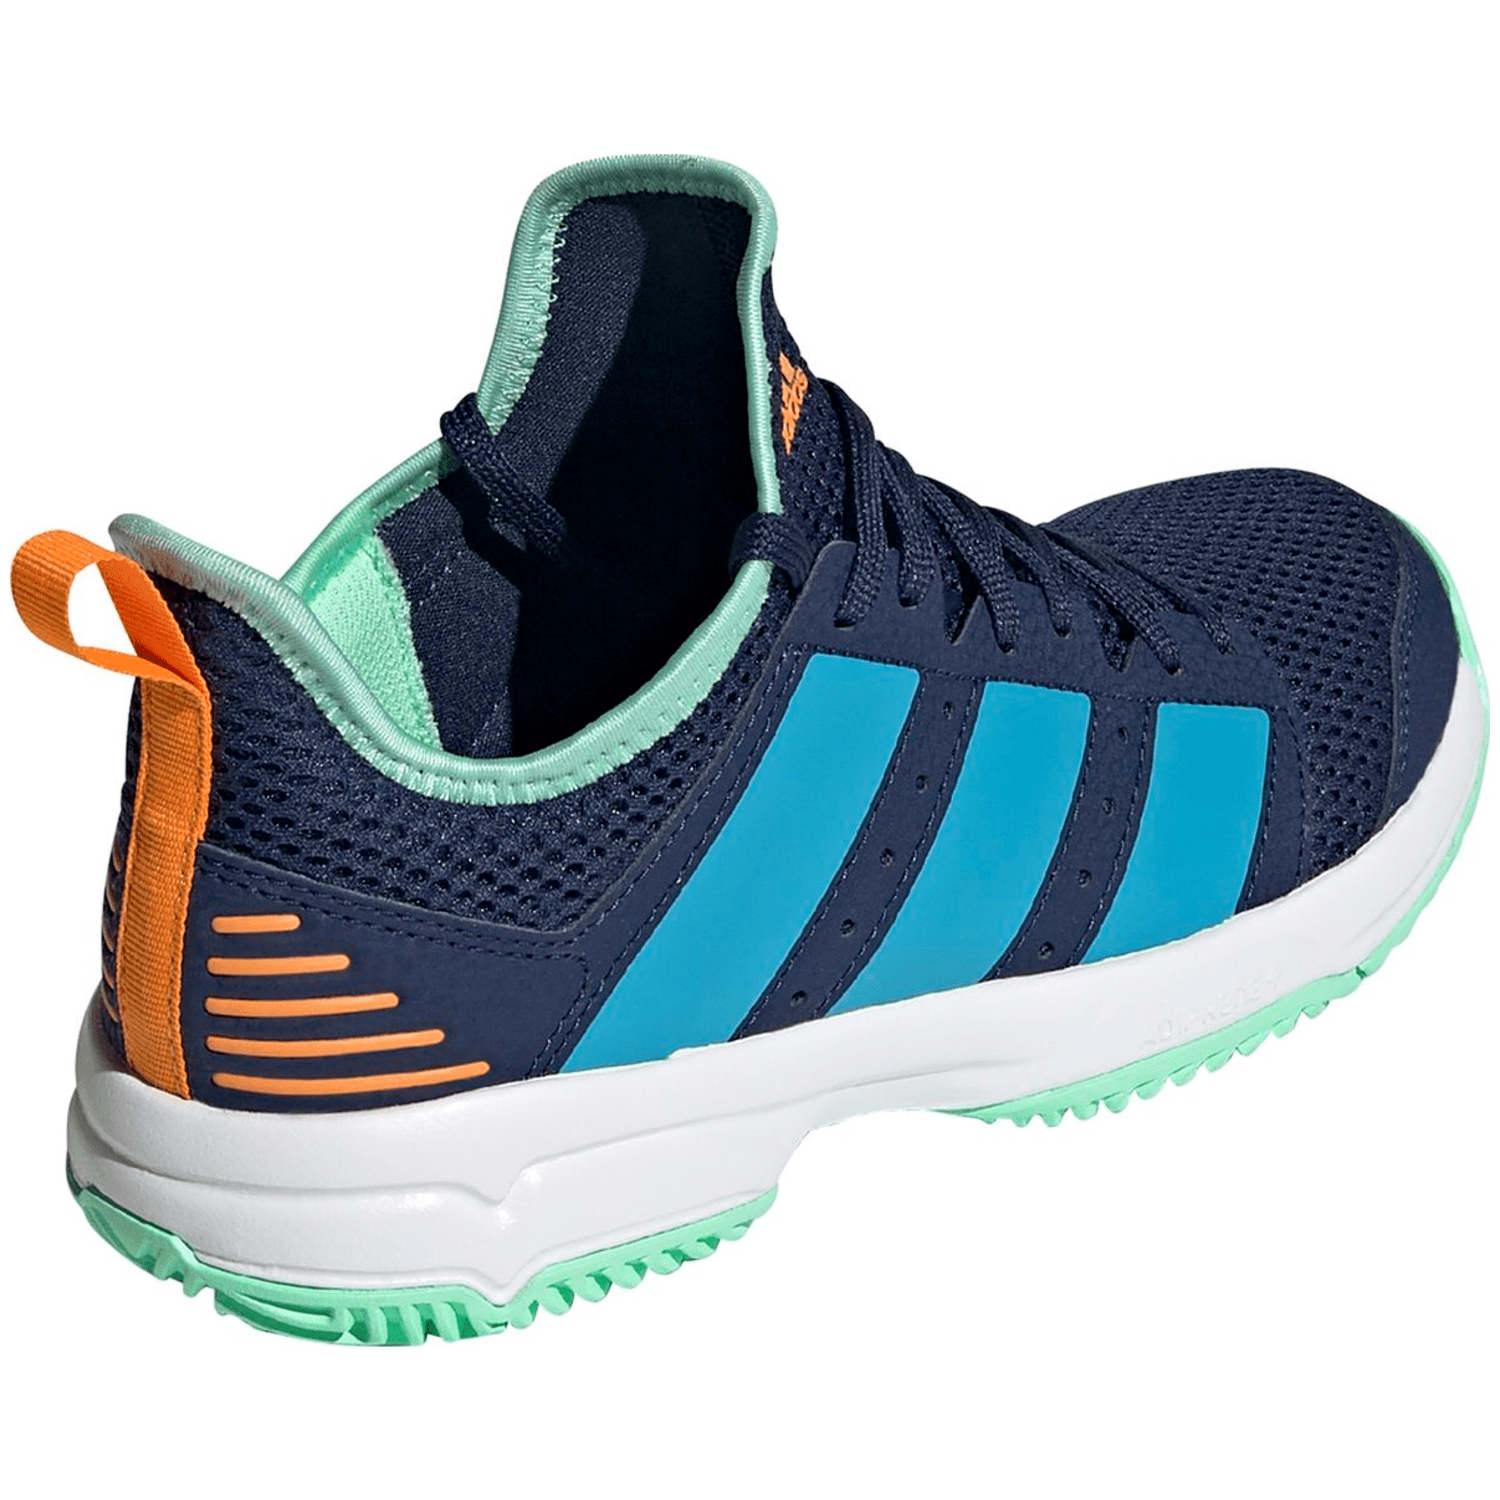 Adidas Stabil Indoor Schuh Kinder